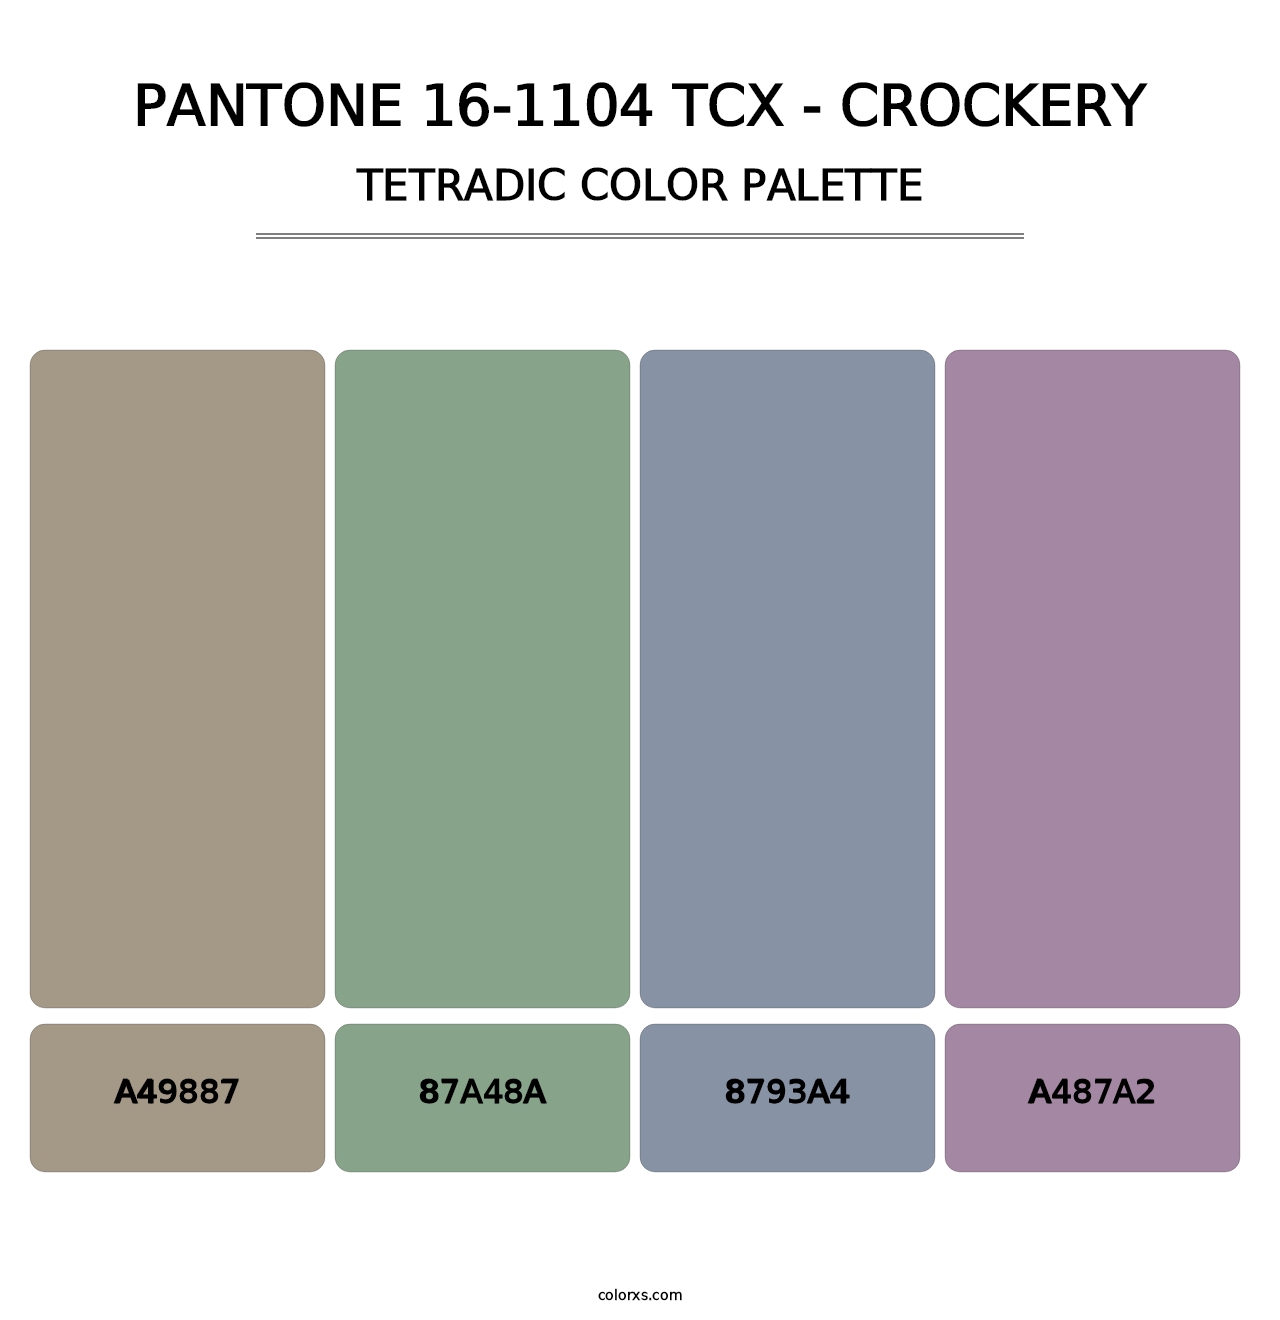 PANTONE 16-1104 TCX - Crockery - Tetradic Color Palette